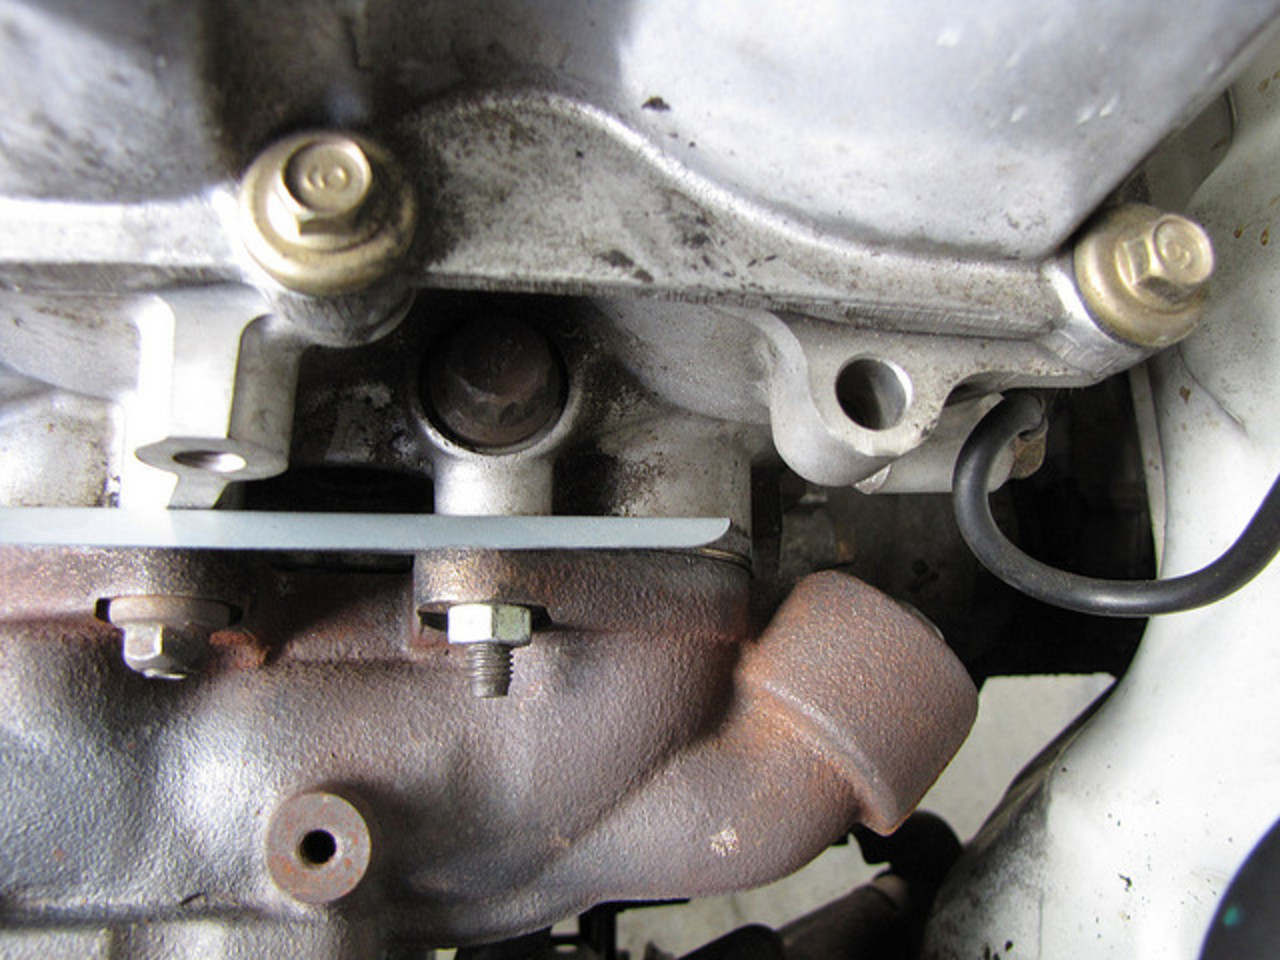 Flickr: Everyone's photos taken near Mazda B2500 Turbodiesel ...